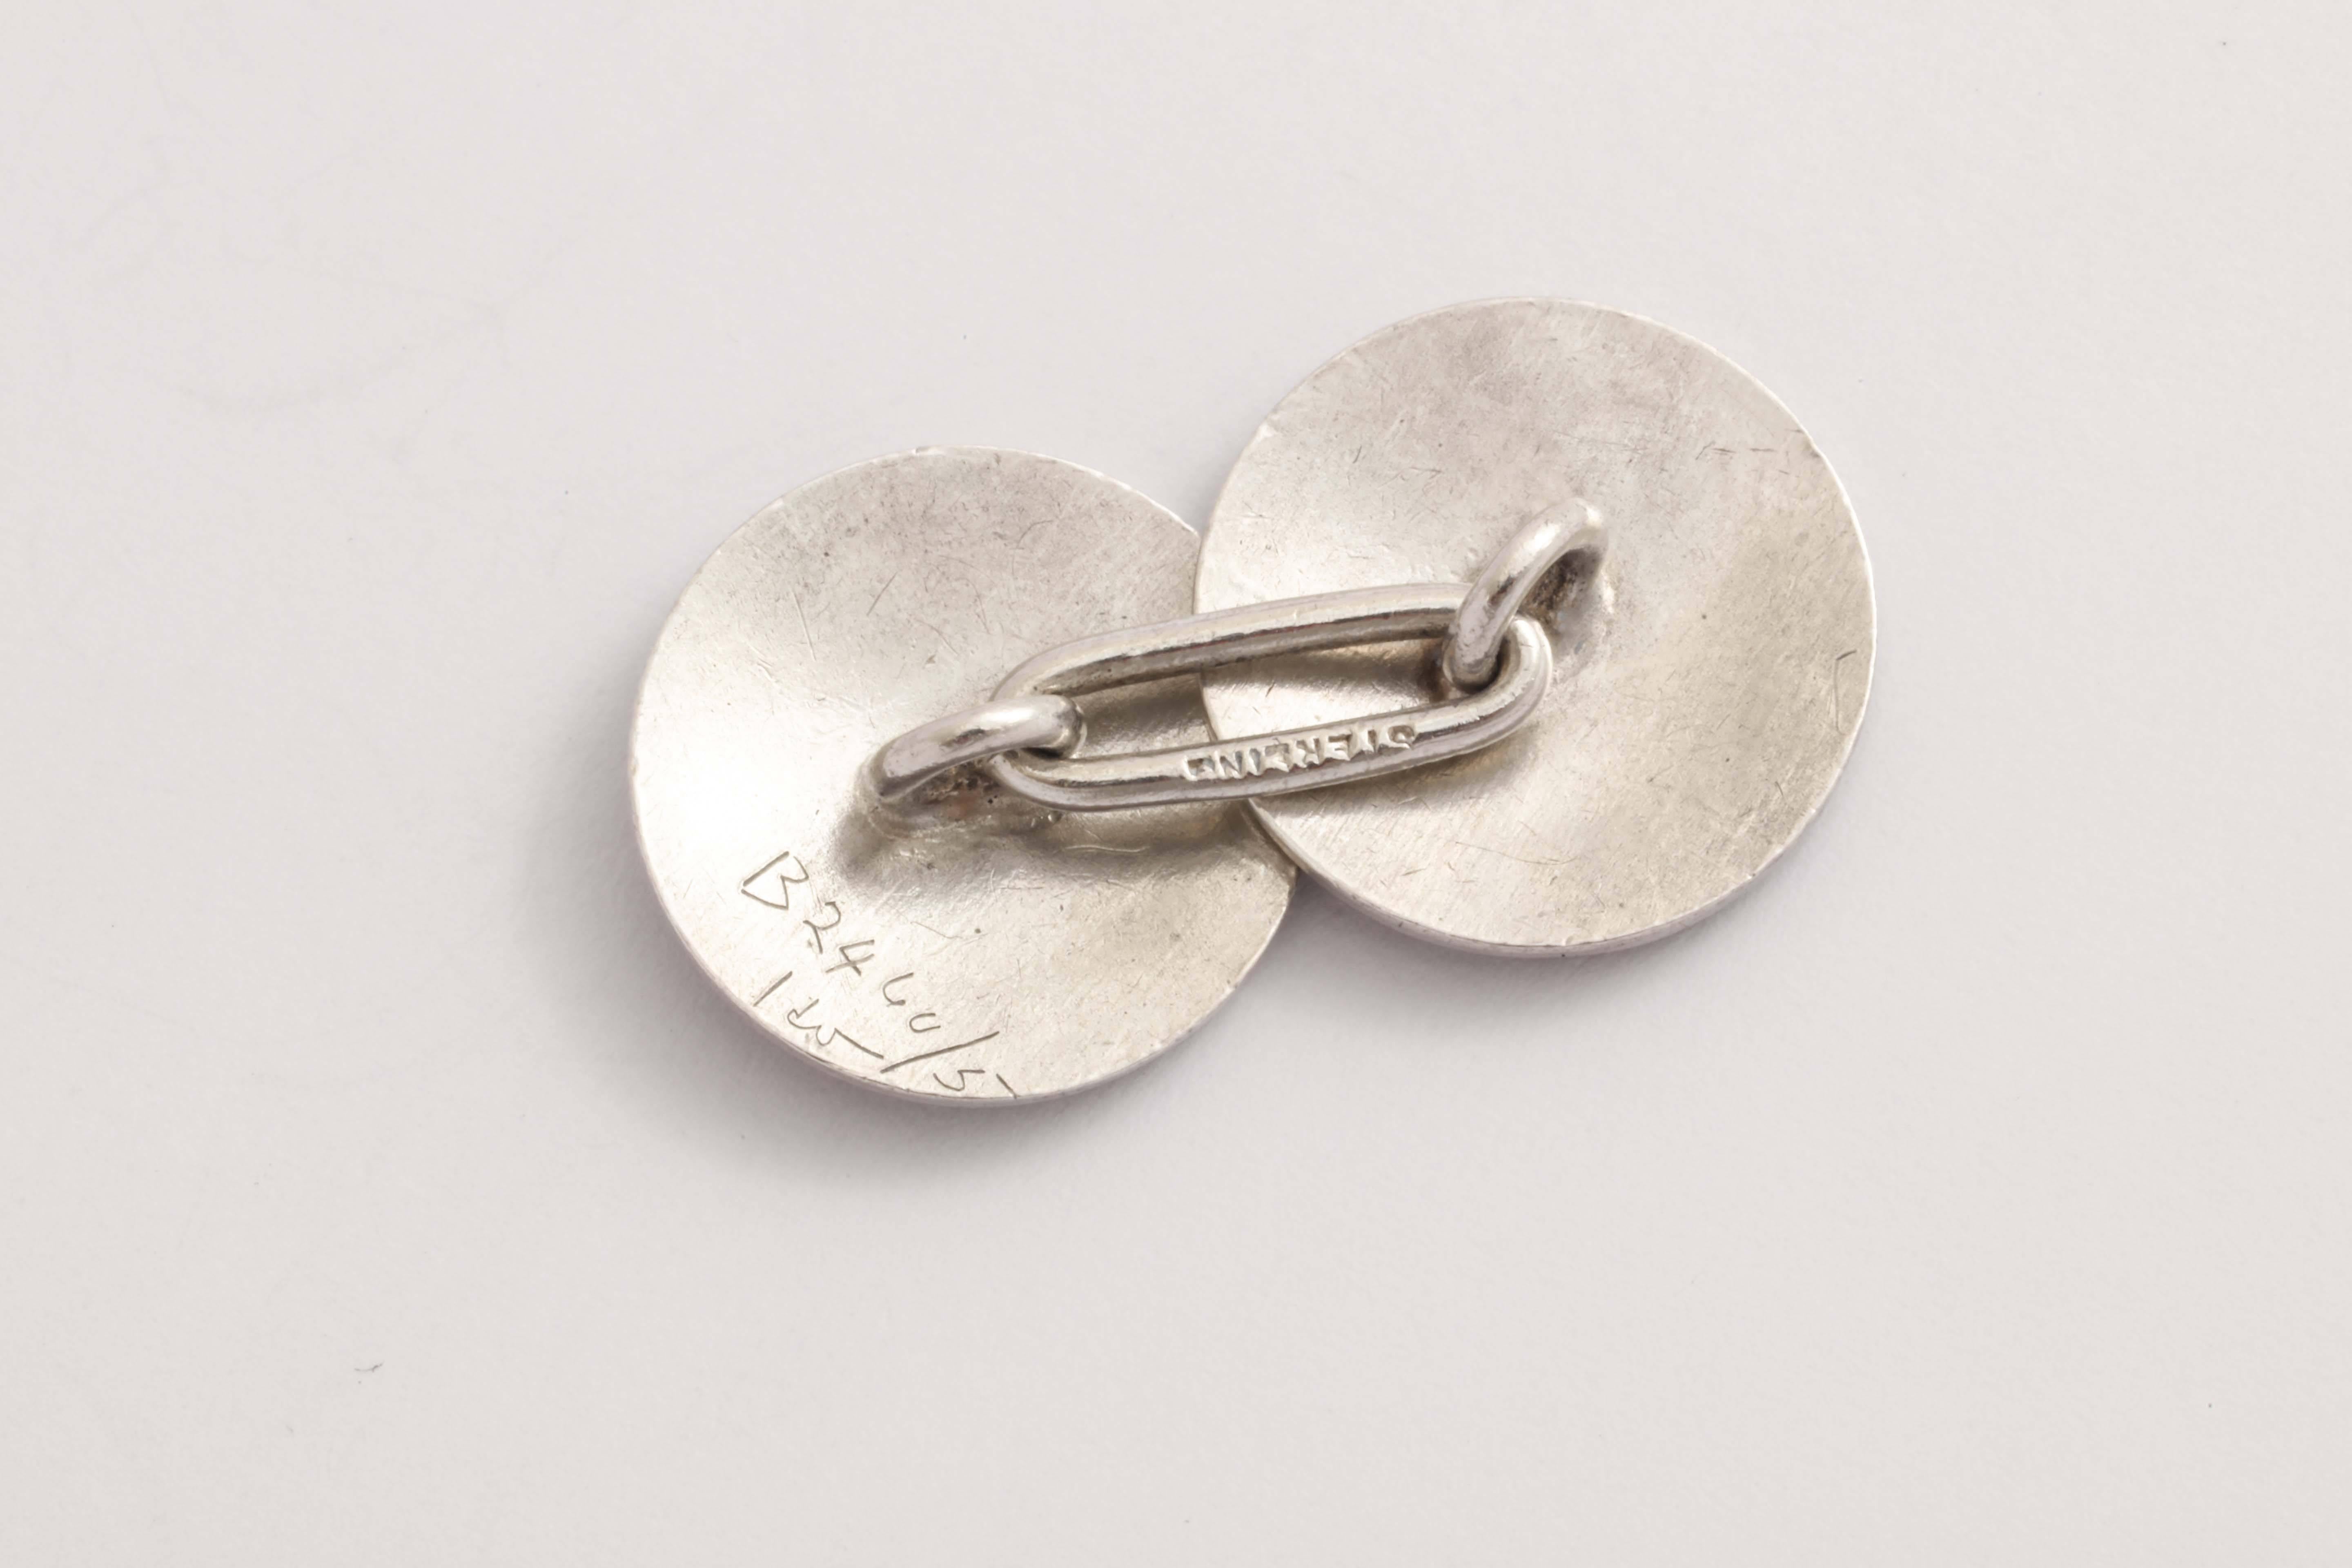 American Art Deco Sterling Silver and Guilloche Enamel Cufflinks (Art déco)